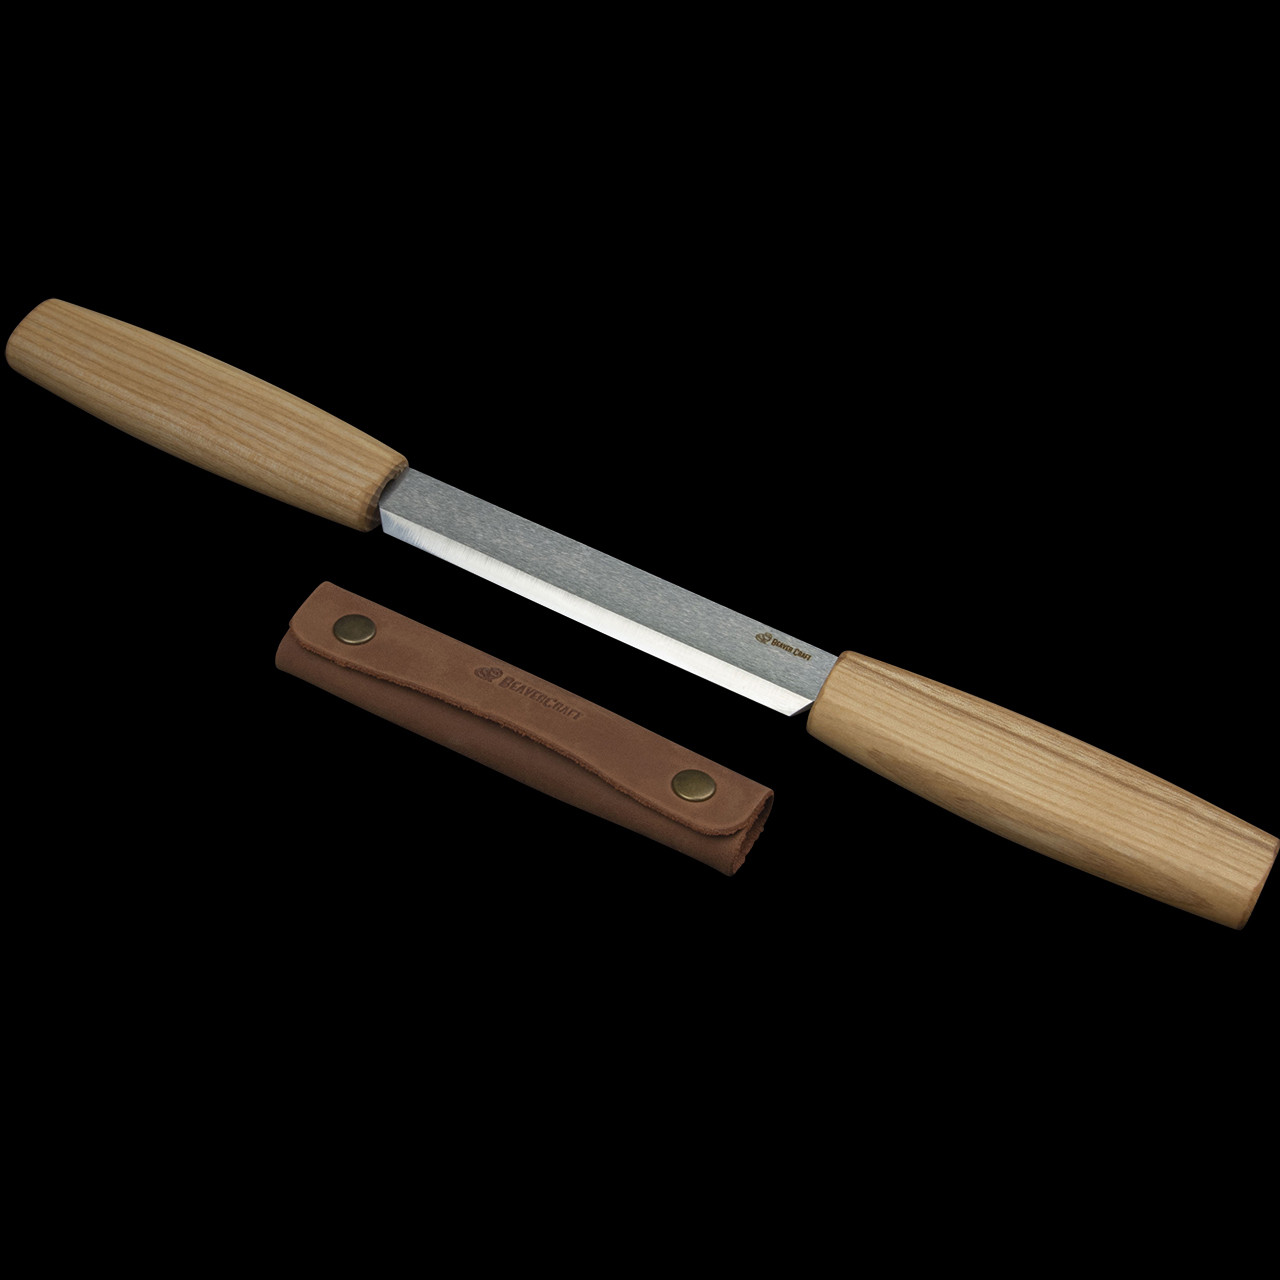 BeaverCraft Drawknife 3mm with Leather Sheath